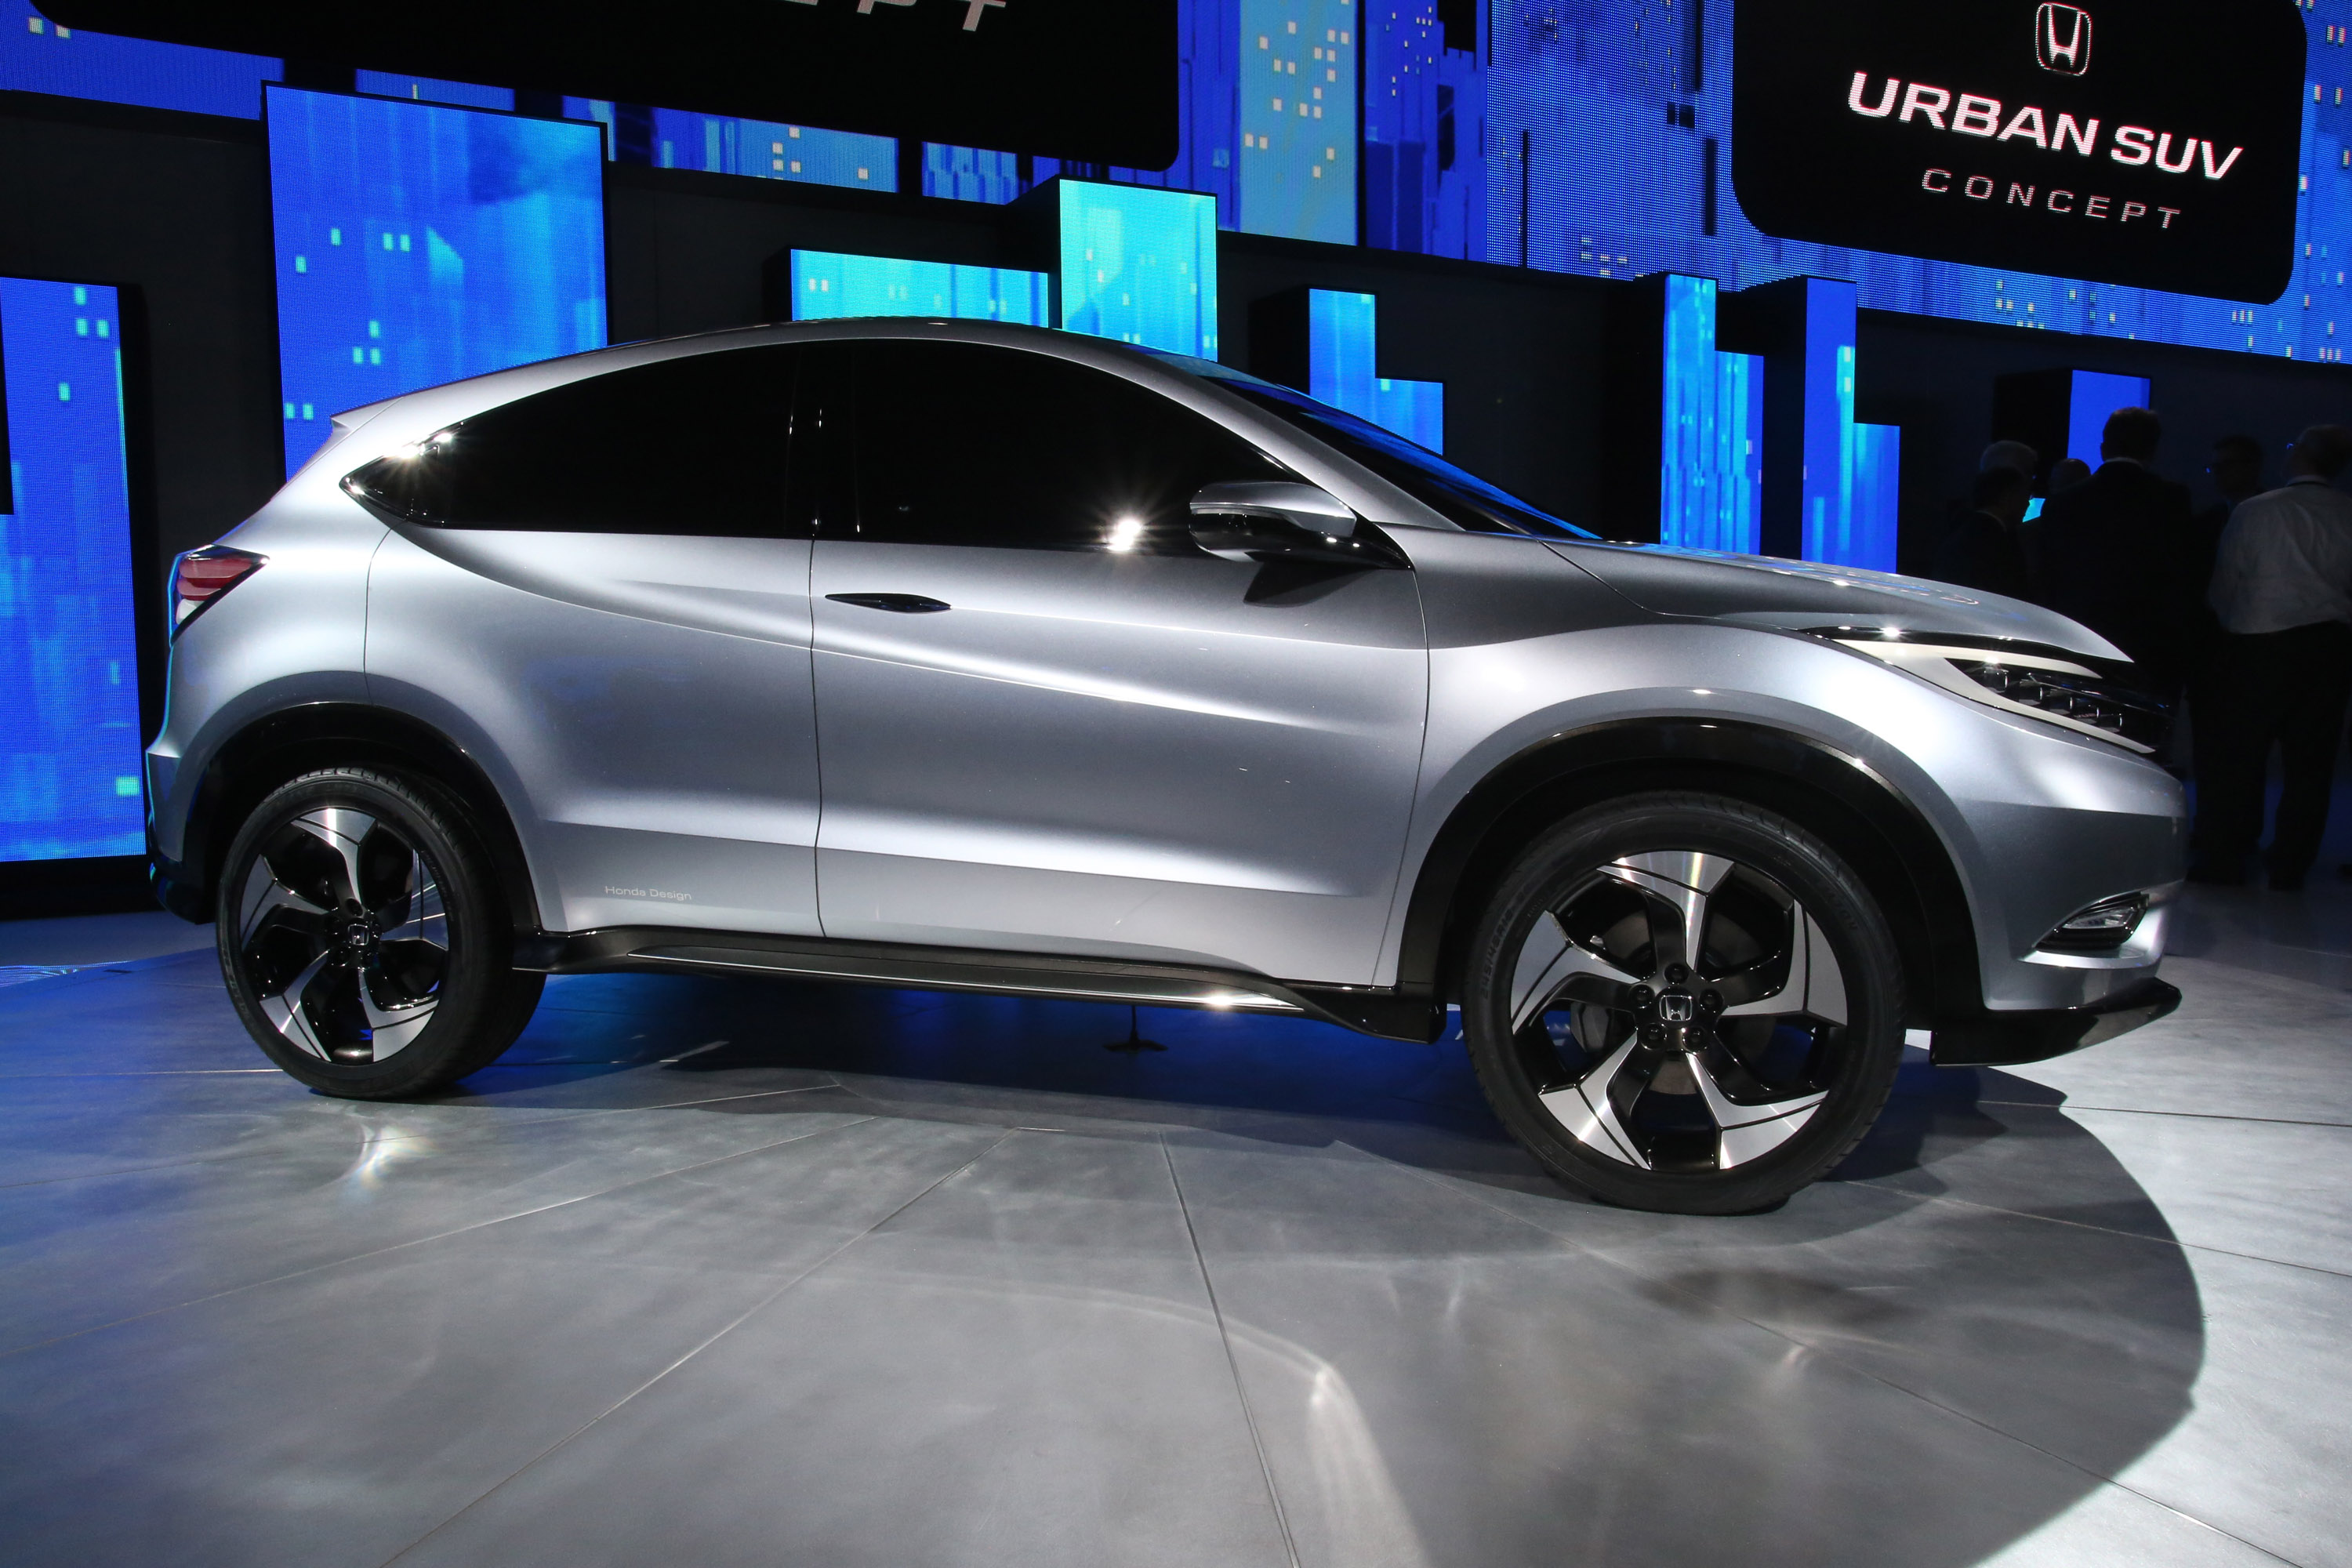 Honda Urban SUV Concept Detroit 2013 - Picture 79660